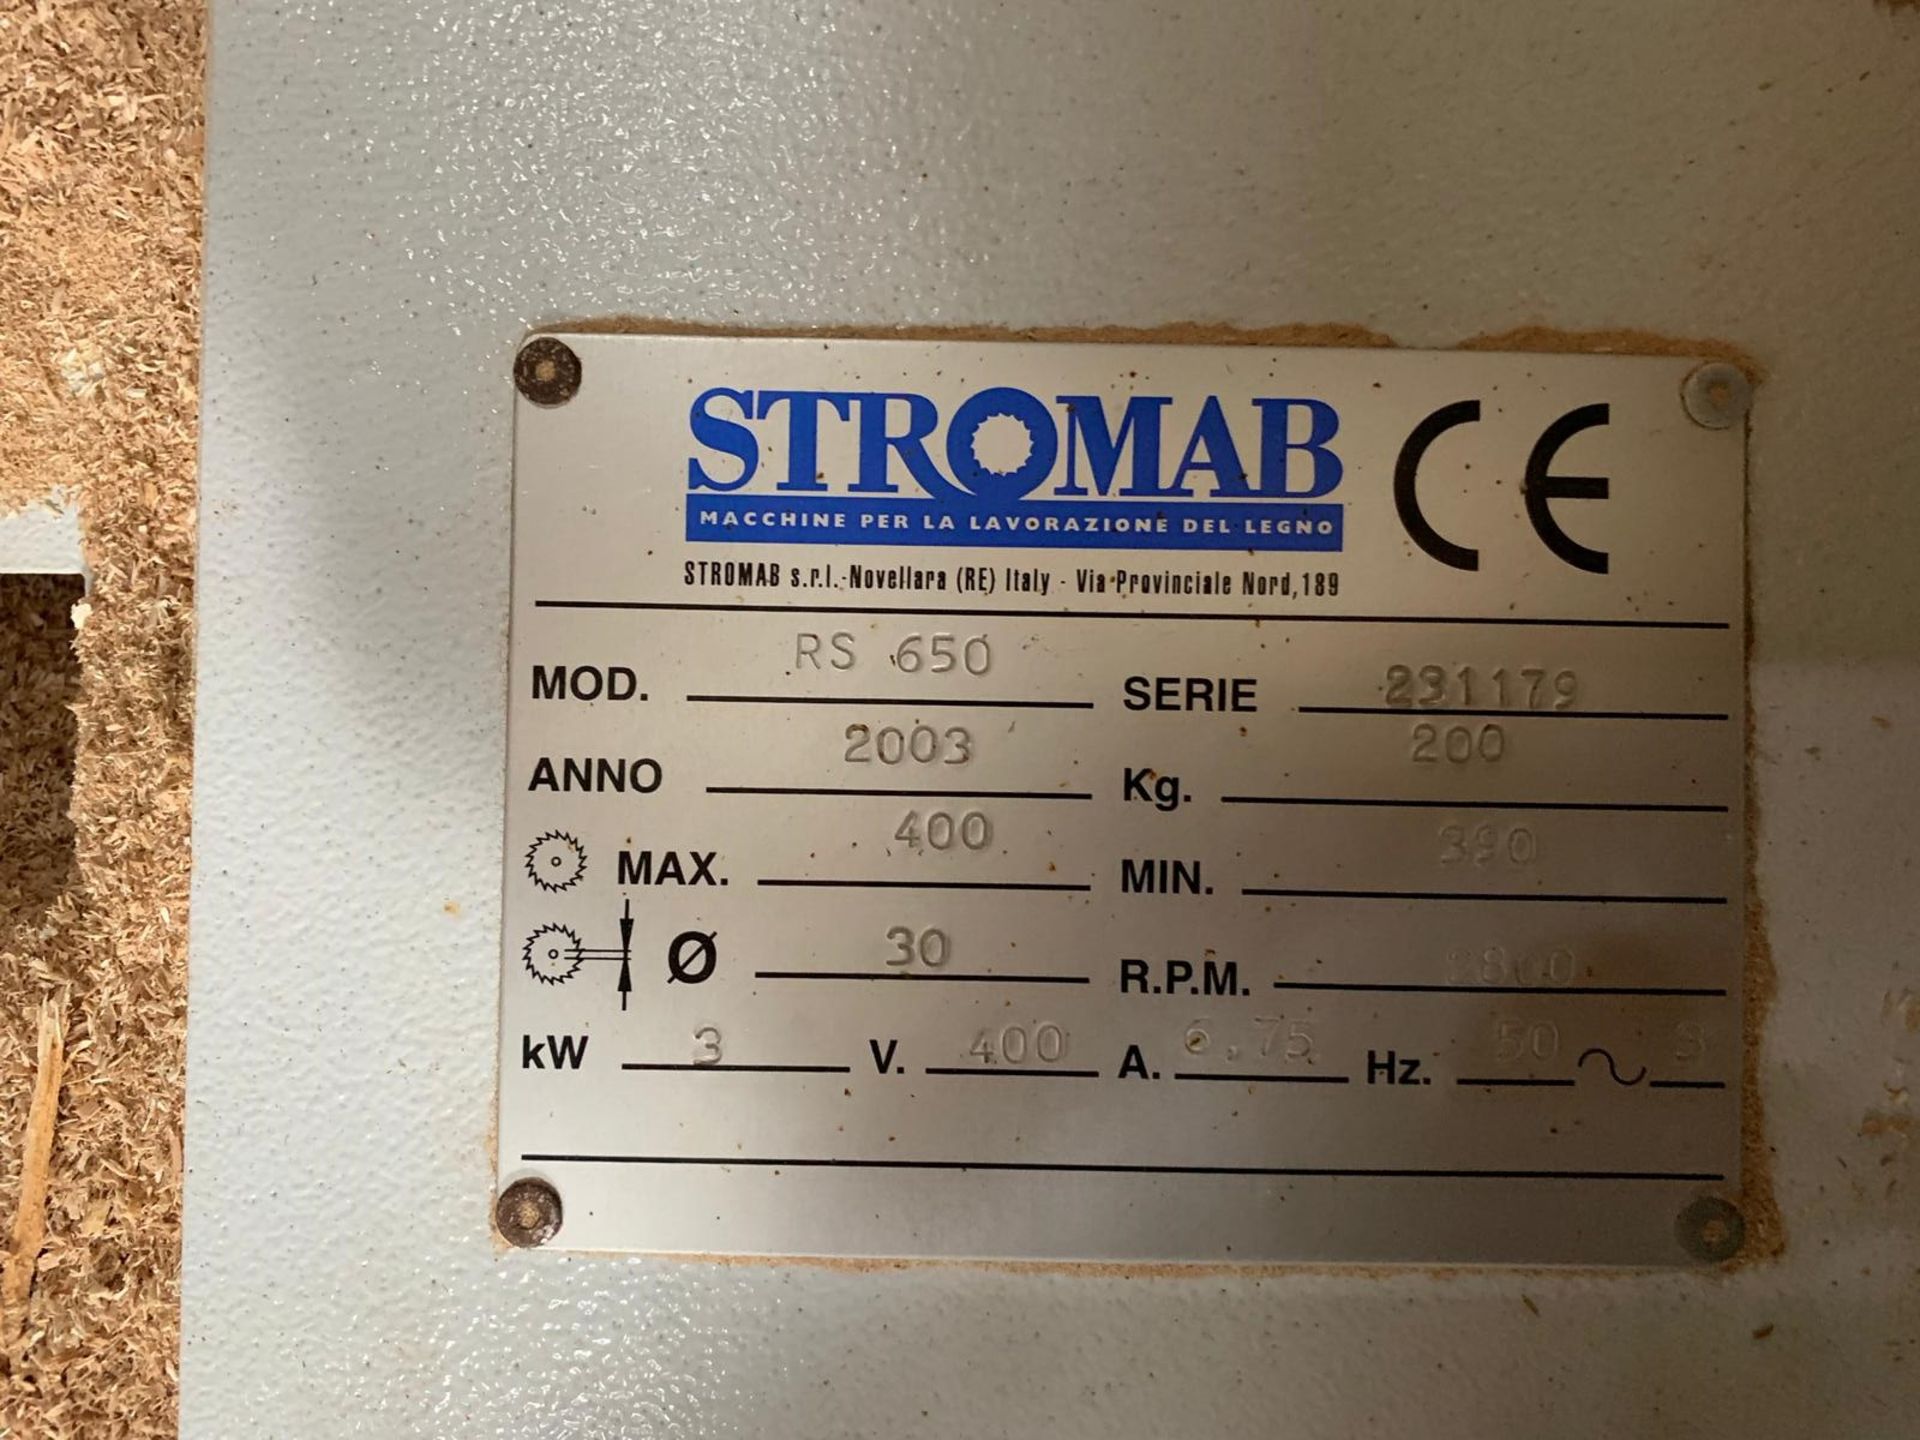 2003 Stromab RADIAL ARM SAW, model R5650, 3 phase, serial no 231179 - Image 2 of 4